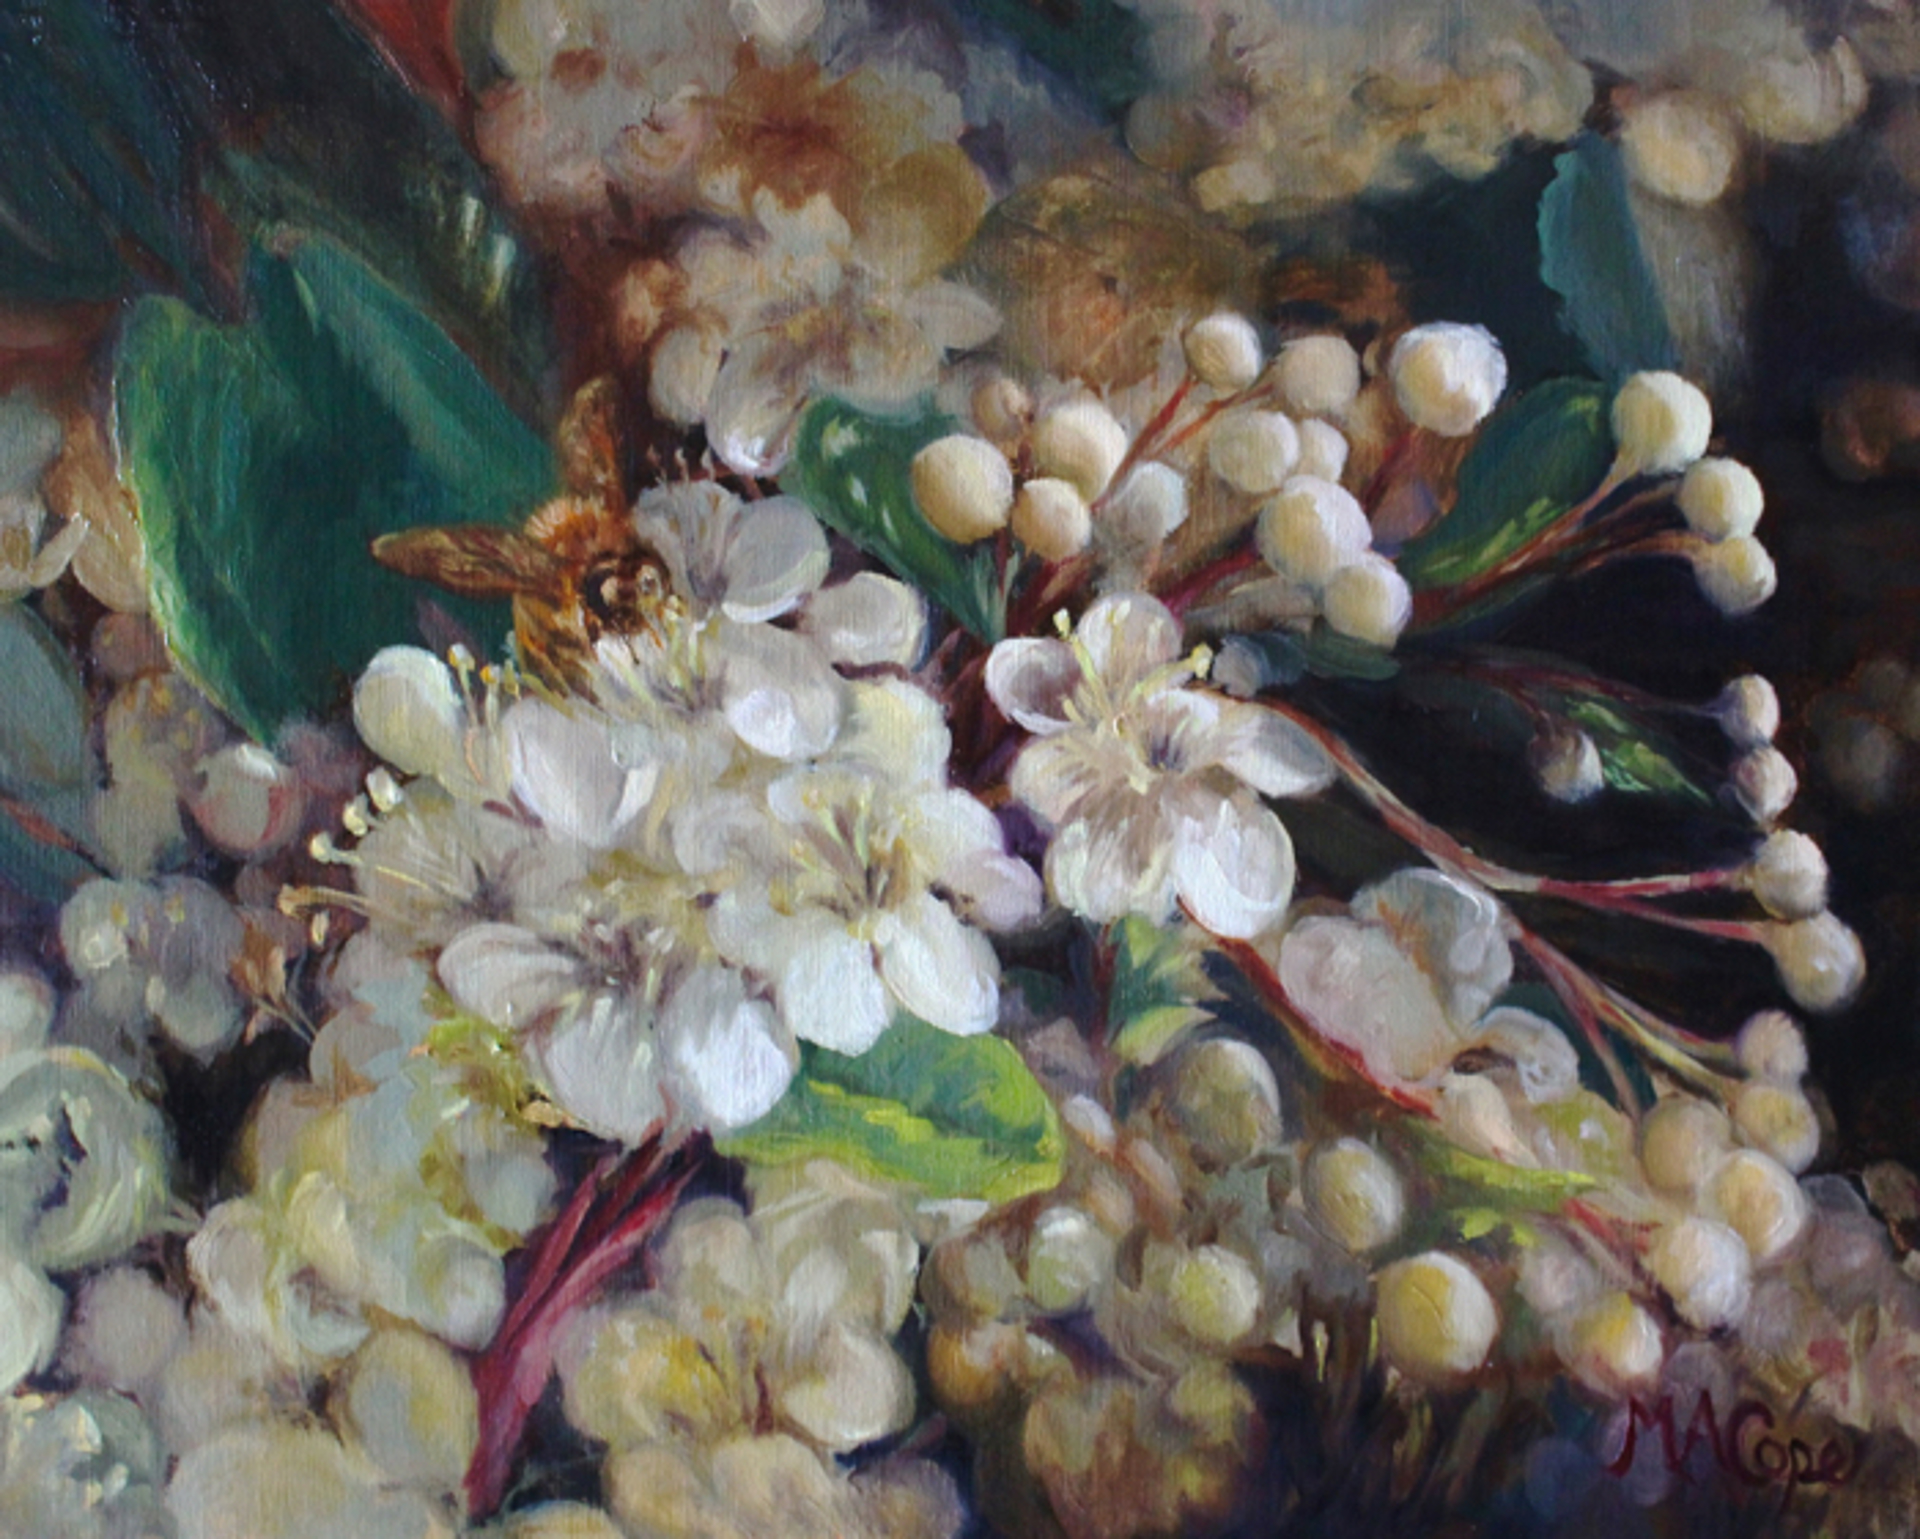 Honeybee by Mary Ann Cope